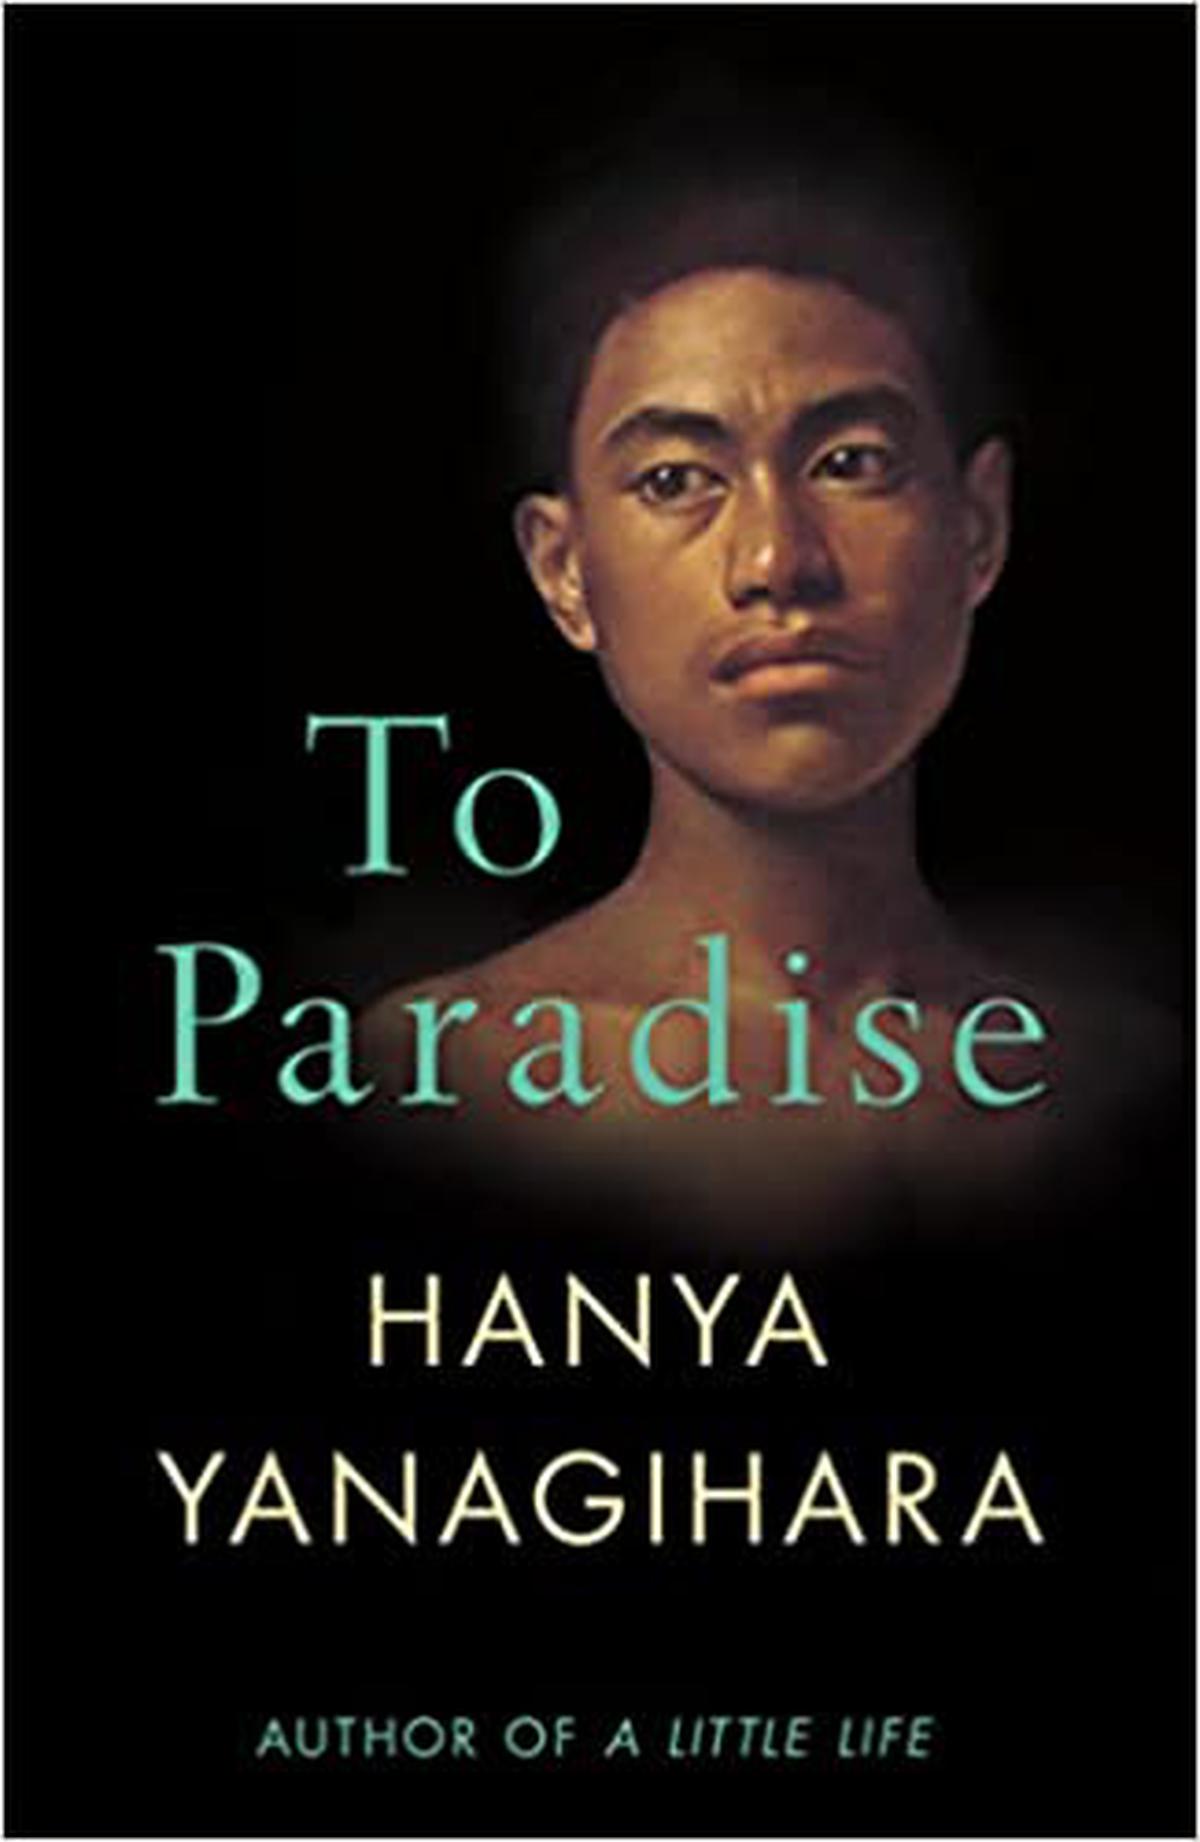 yanagihara to paradise review